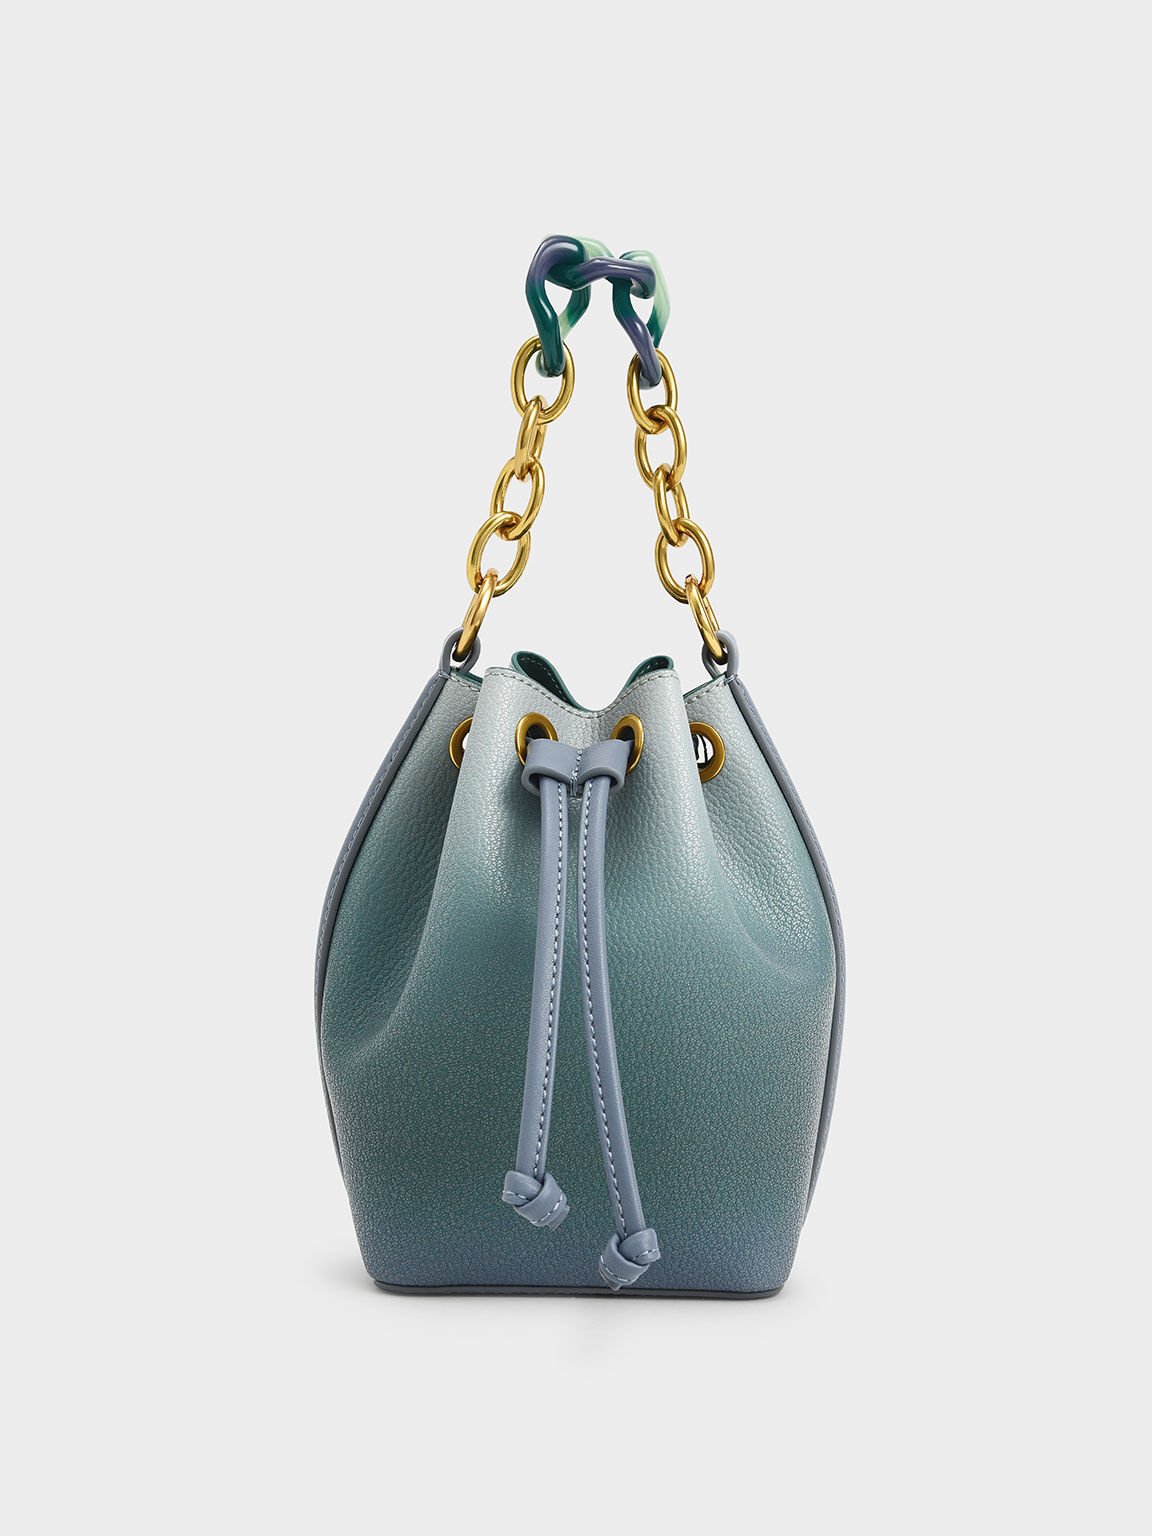 Marlowe Chain-Handle Drawstring Bucket Bag, Teal, hi-res